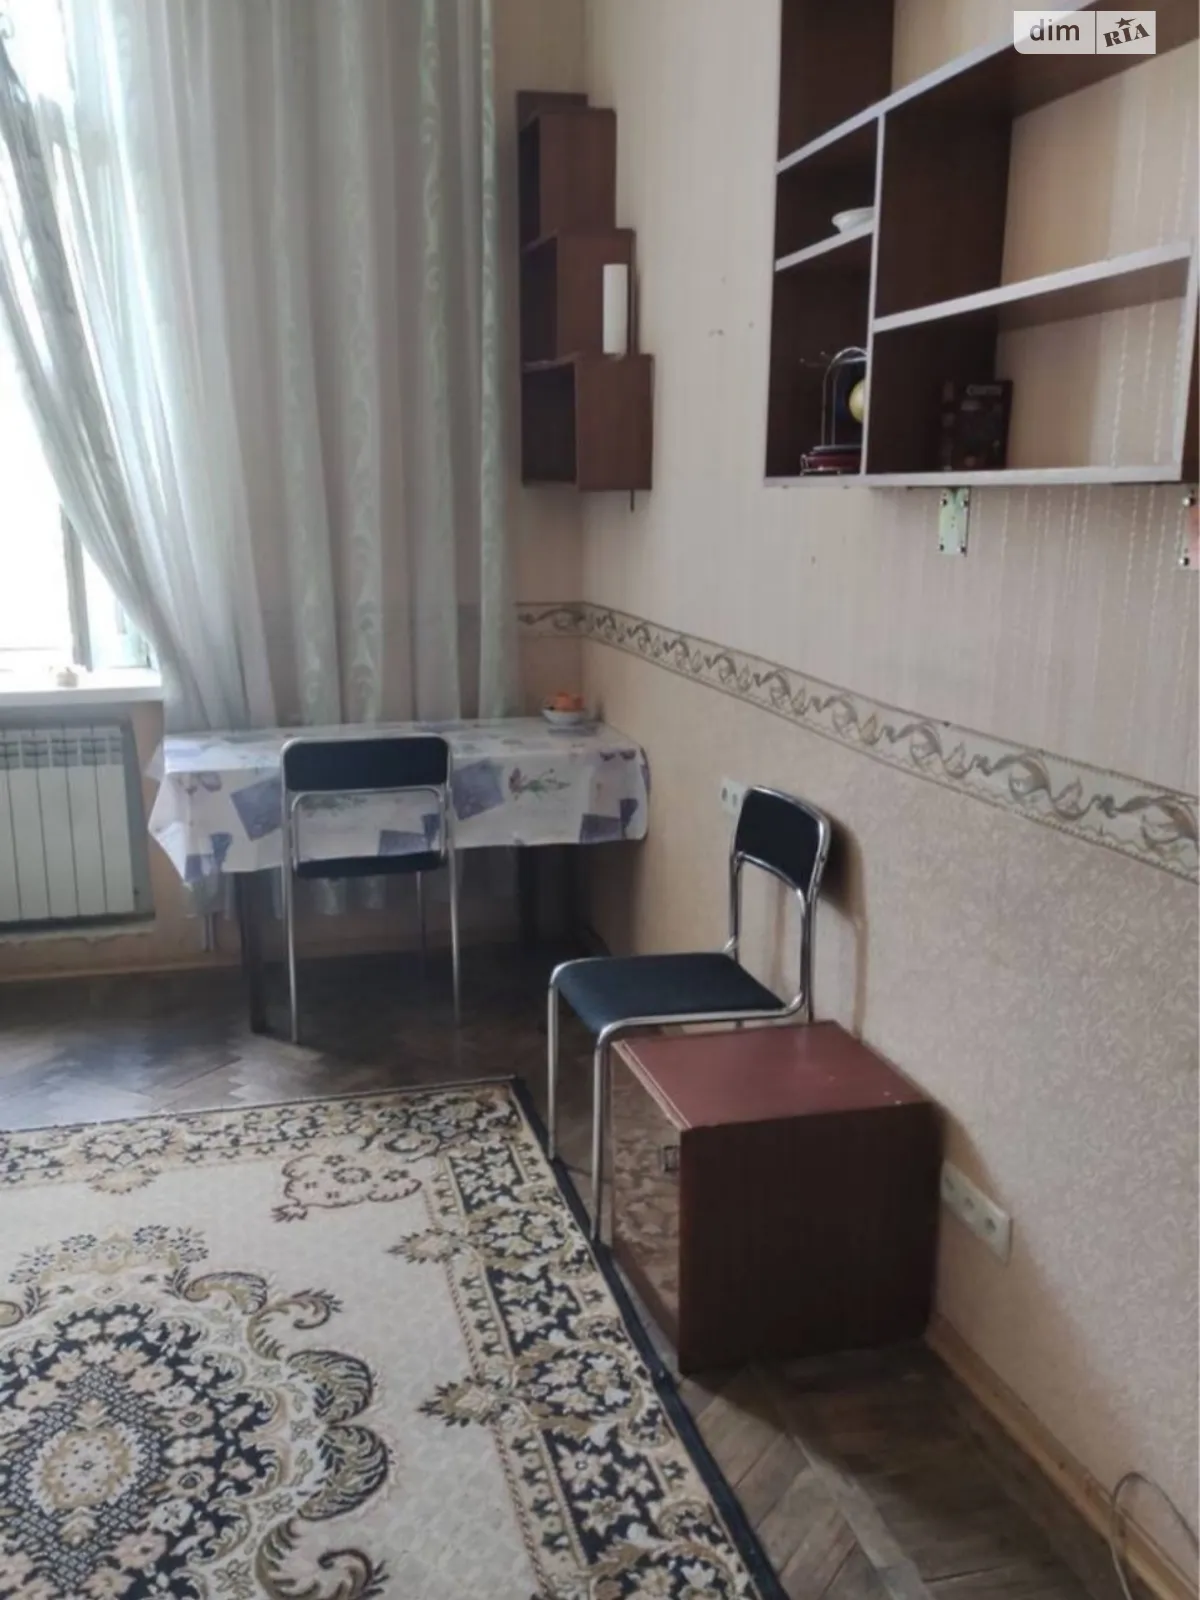 Продается комната 17.5 кв. м в Одессе, цена: 11000 $ - фото 1